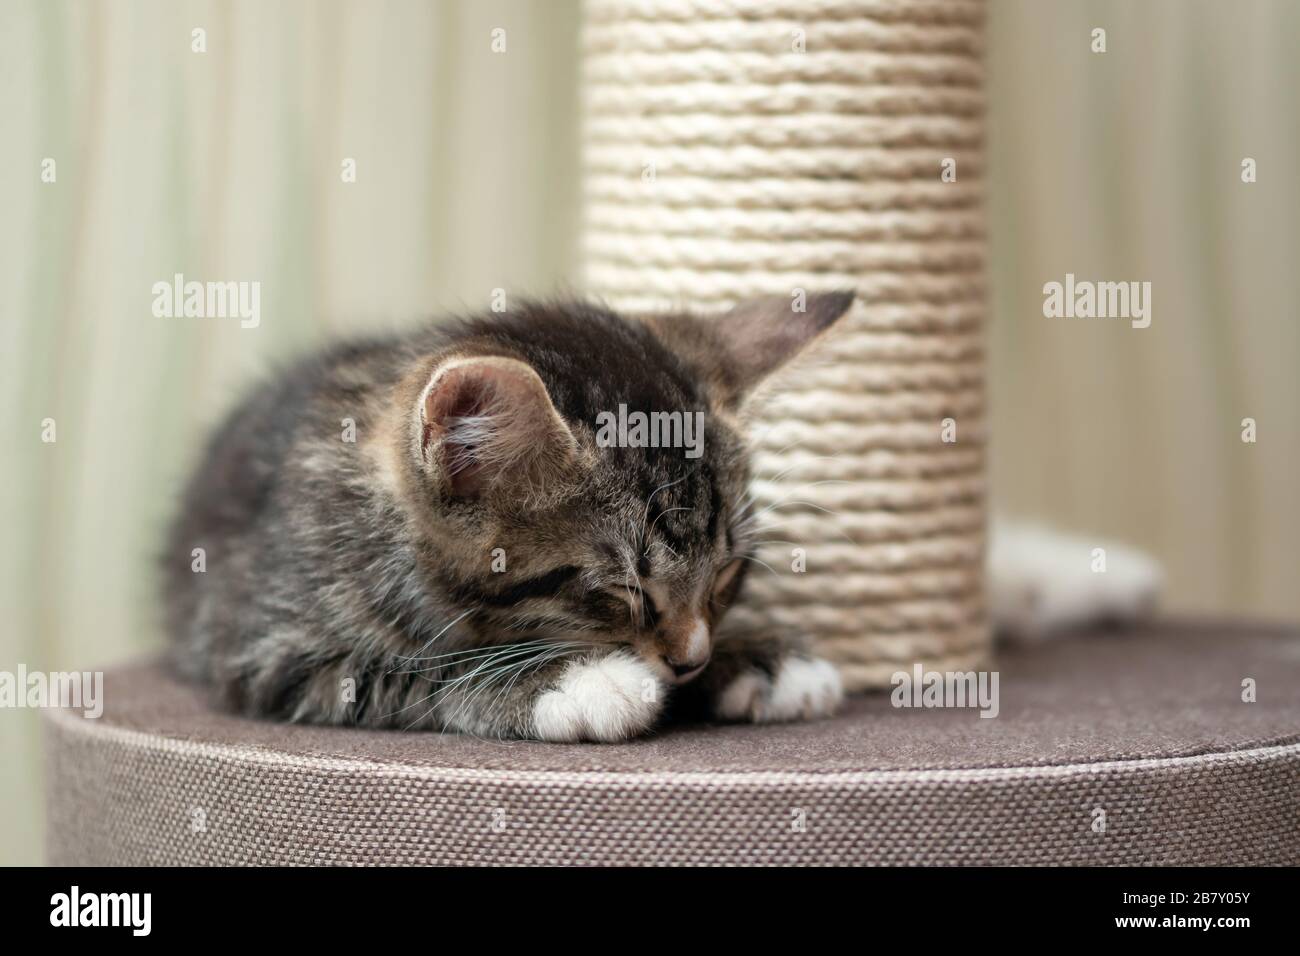 Cute gray tabby kitten sleeping near the scratching post. Stock Photo